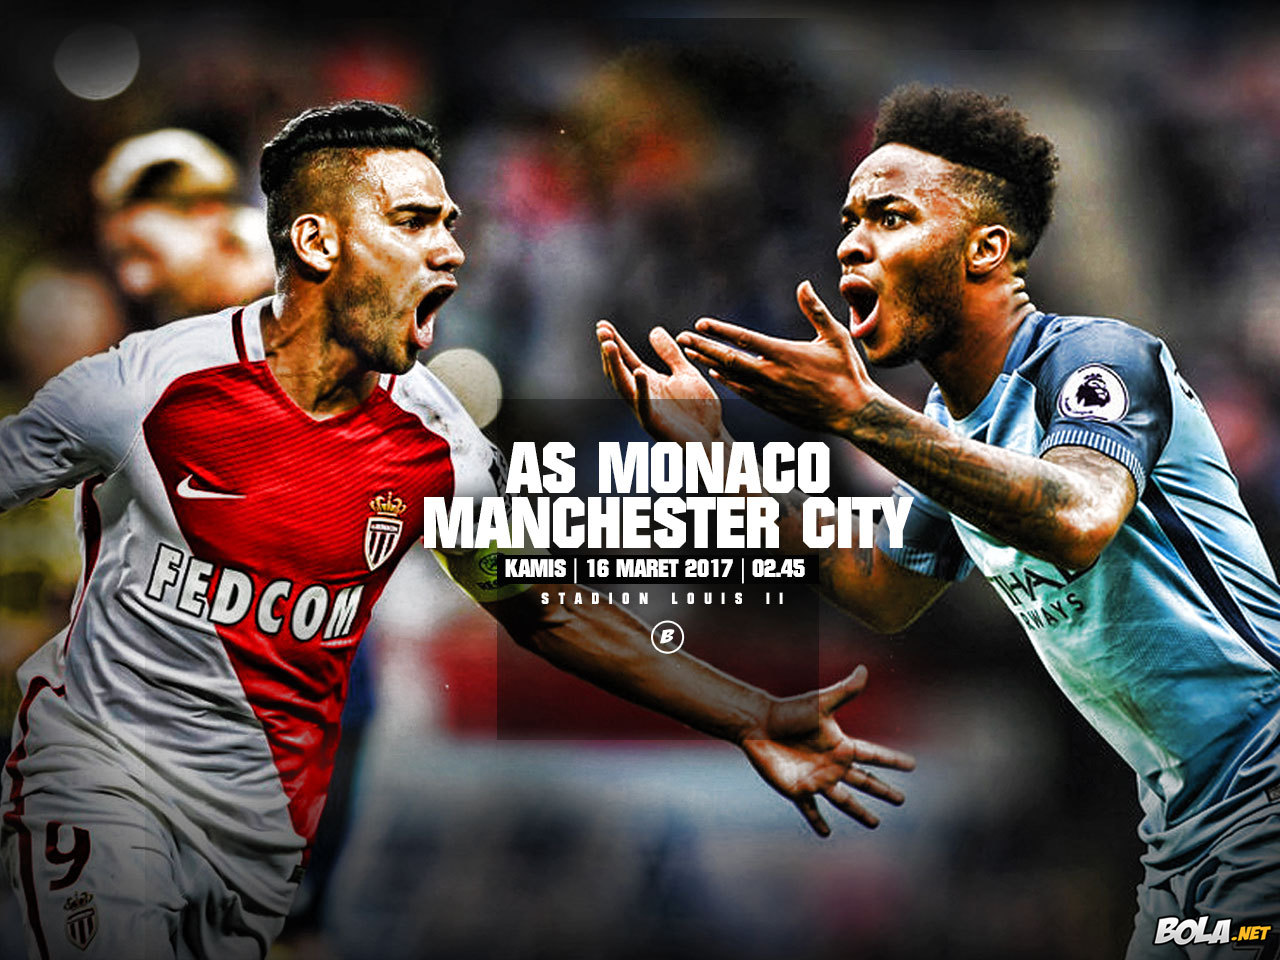 Deskripsi : Wallpaper As Monaco Vs Manchester City, size: 1280x960